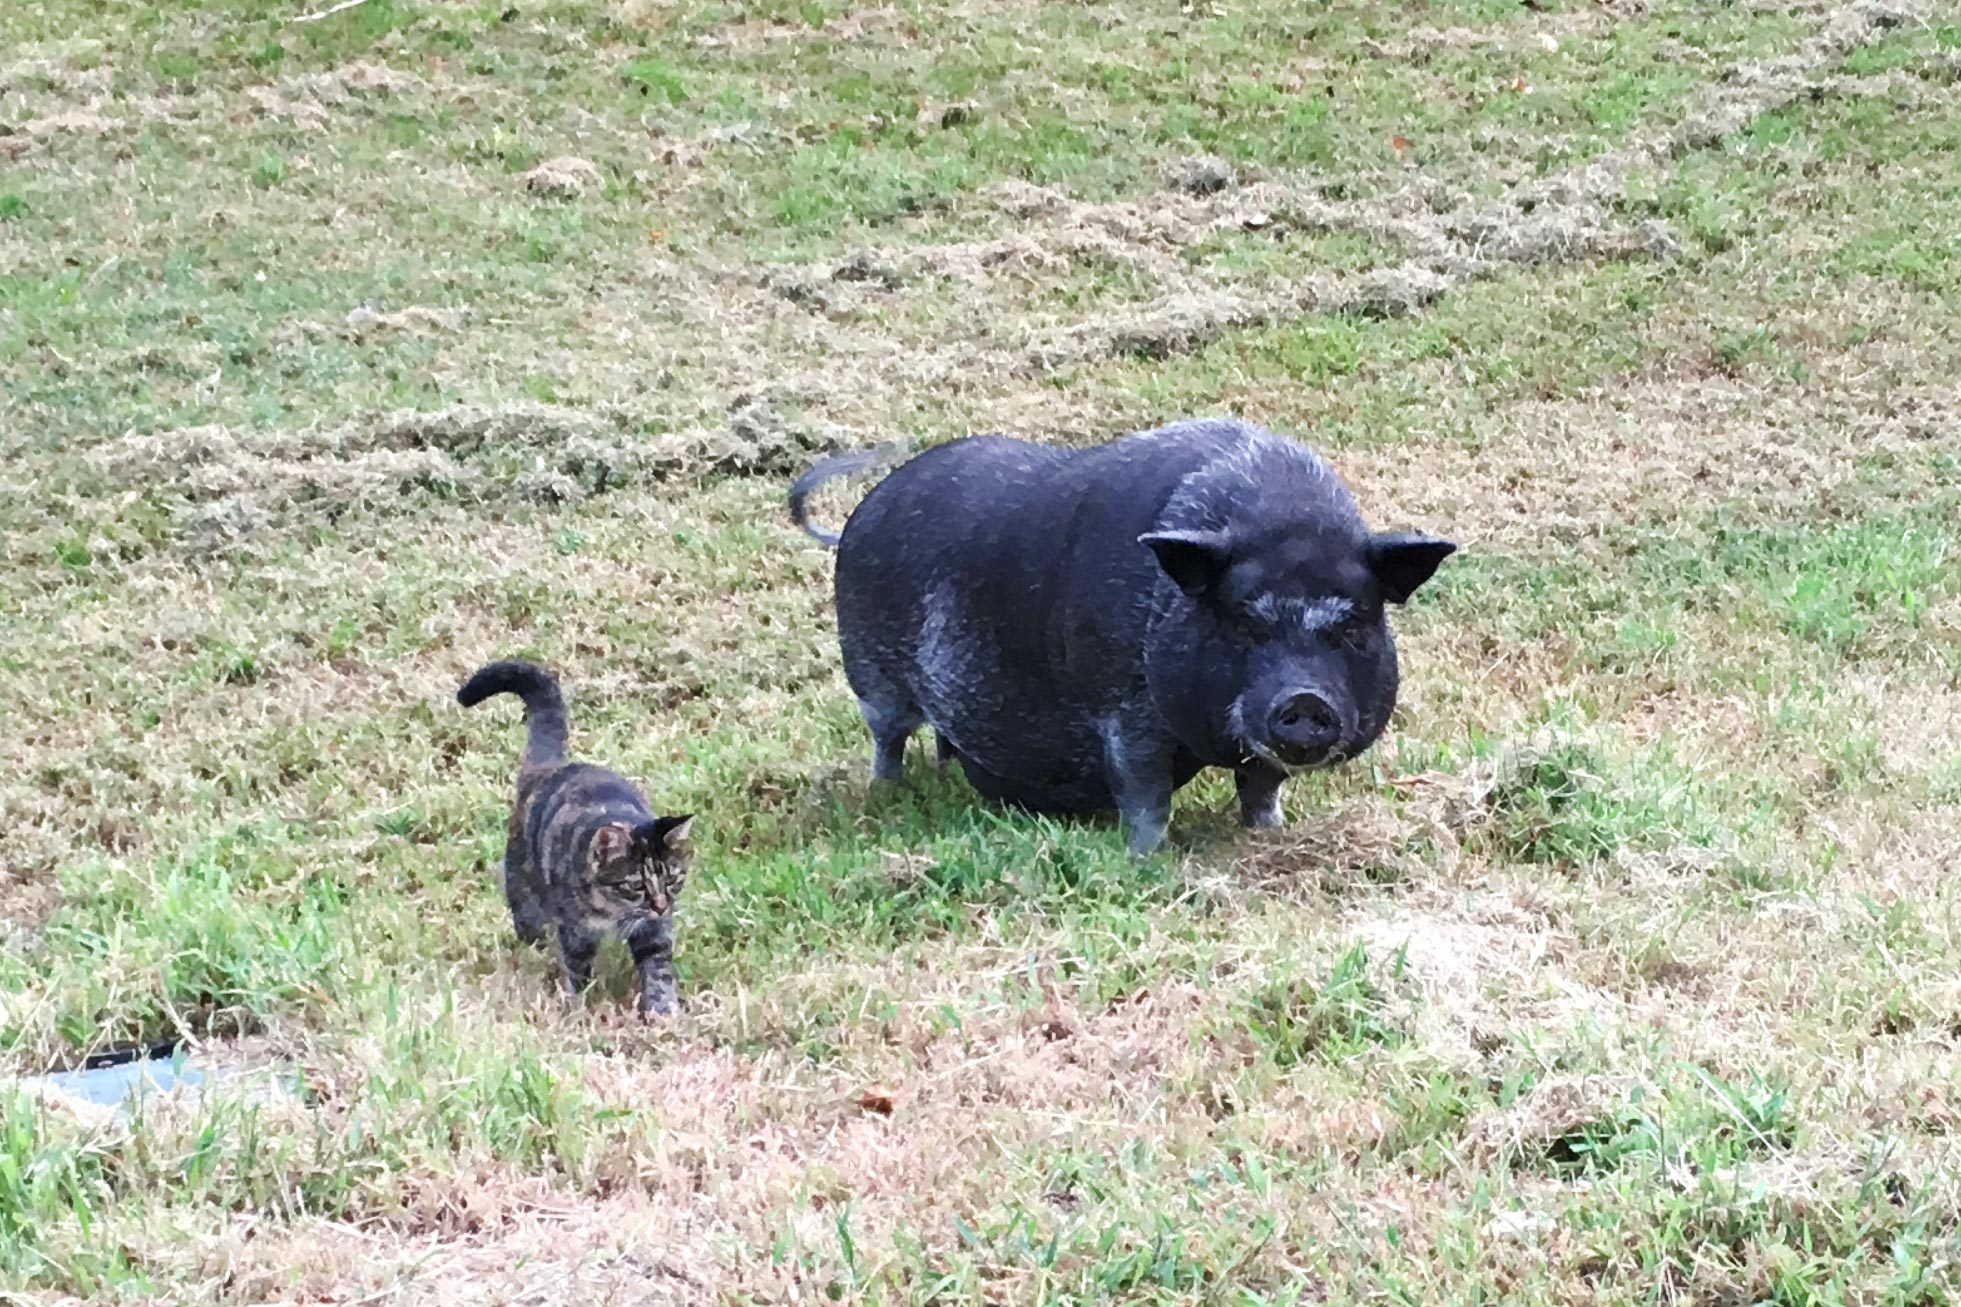 pig and cat pet pals